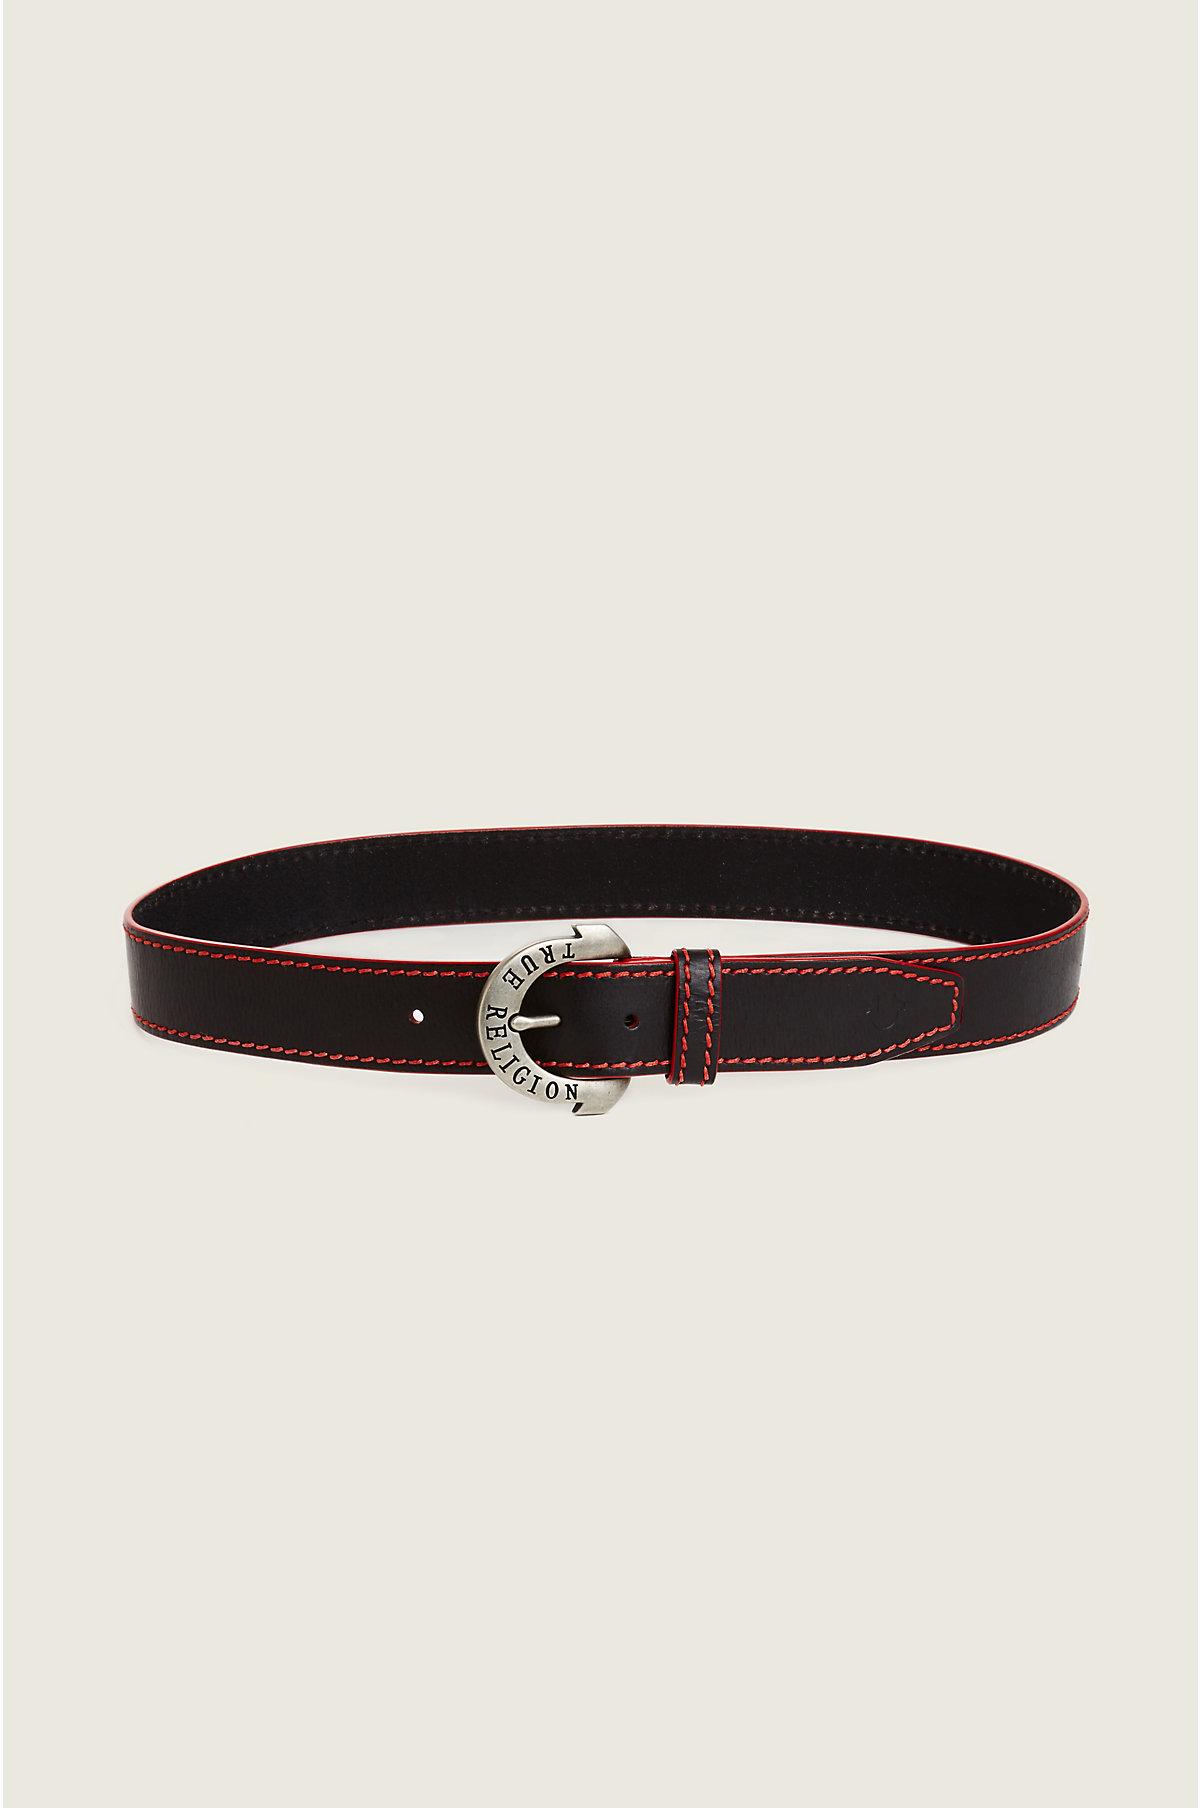 True Religion Red Big T Belt in Black for Men - Lyst